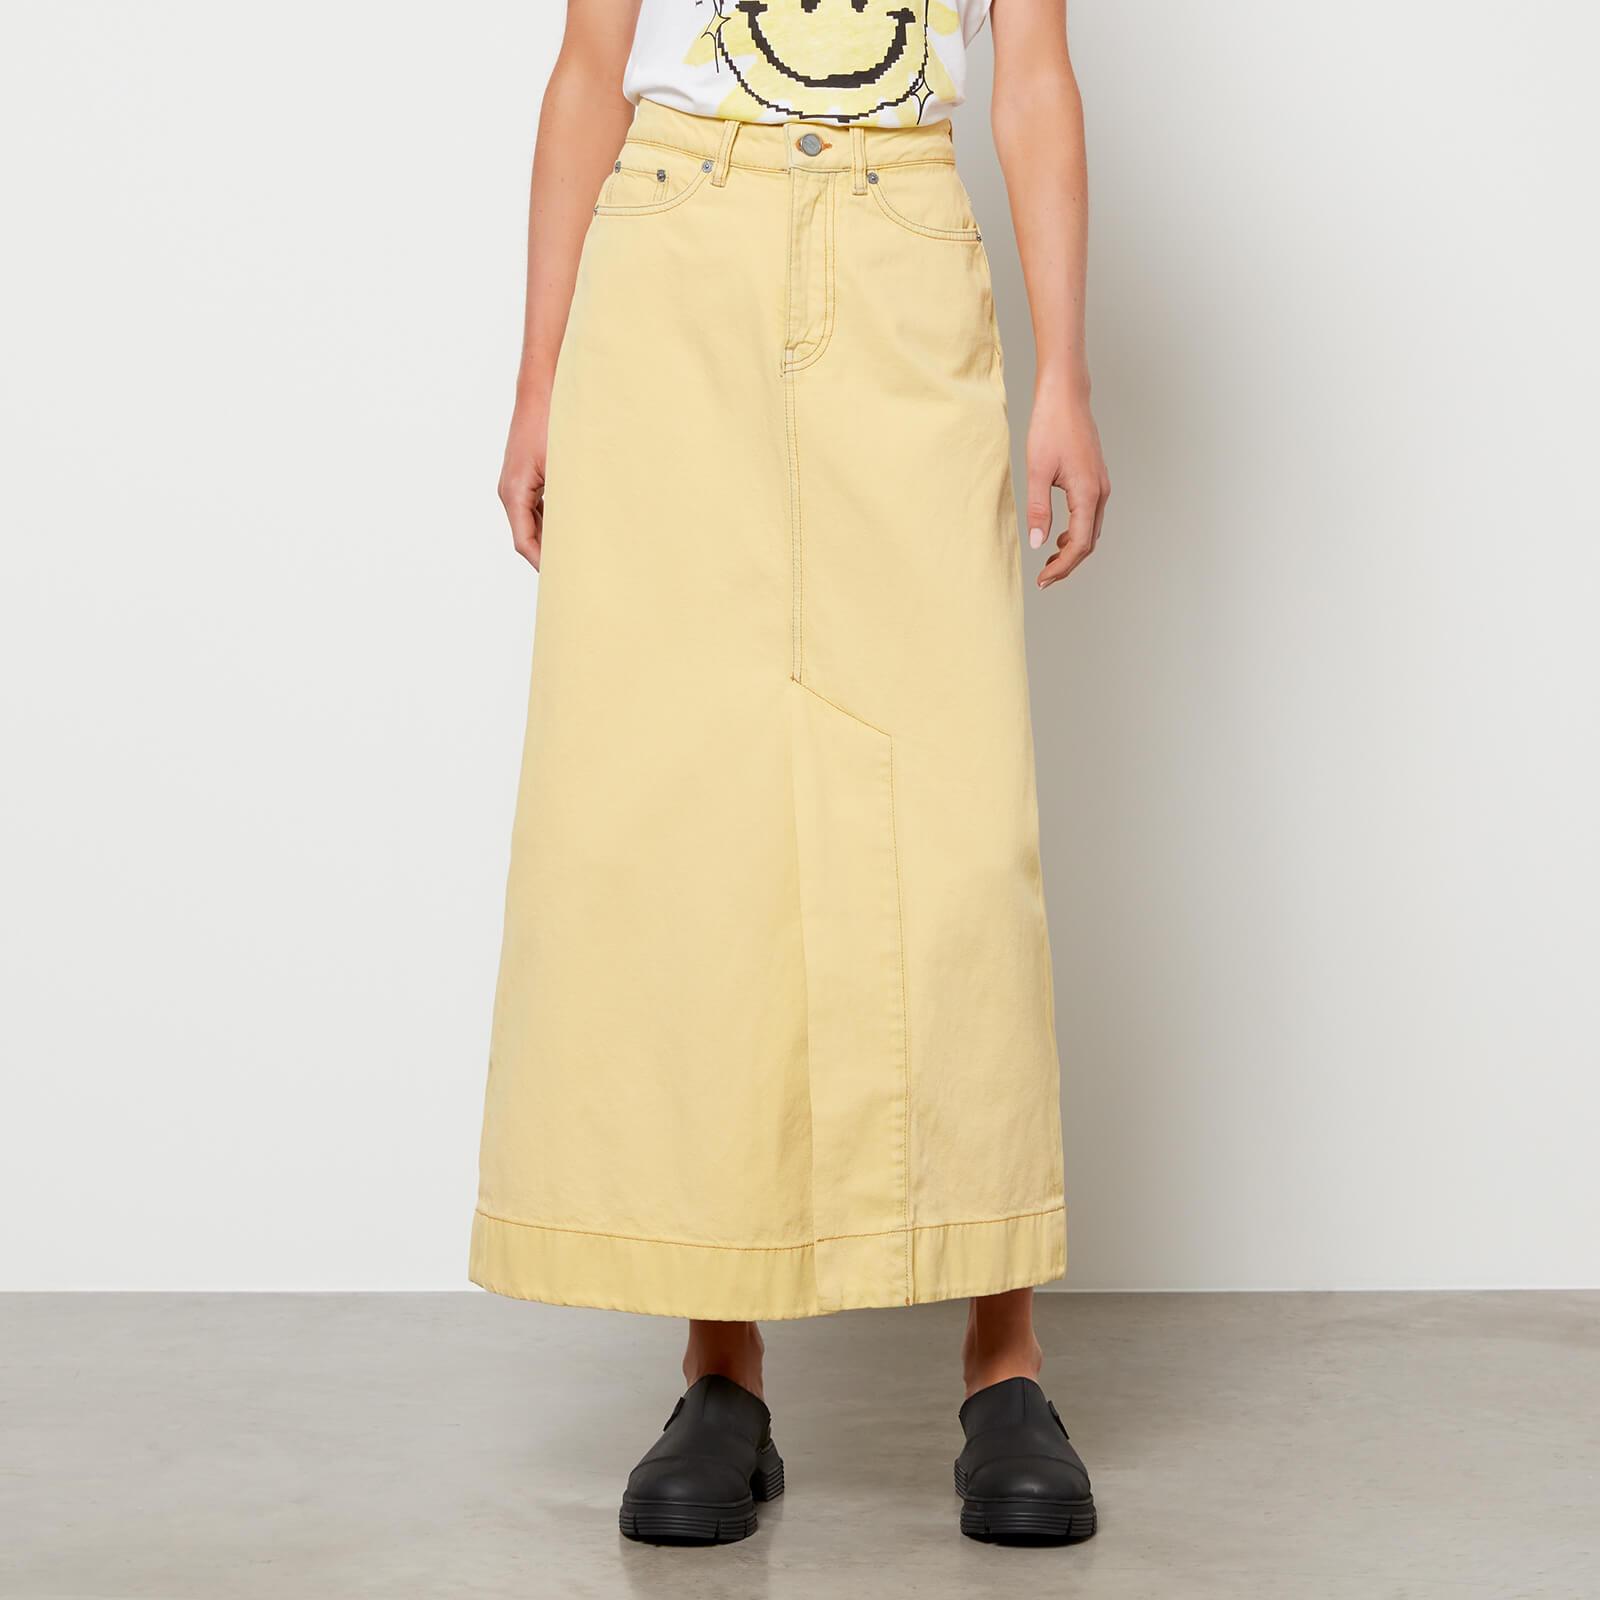 Ganni Overdyed Bleach Denim Skirt in Yellow | Lyst